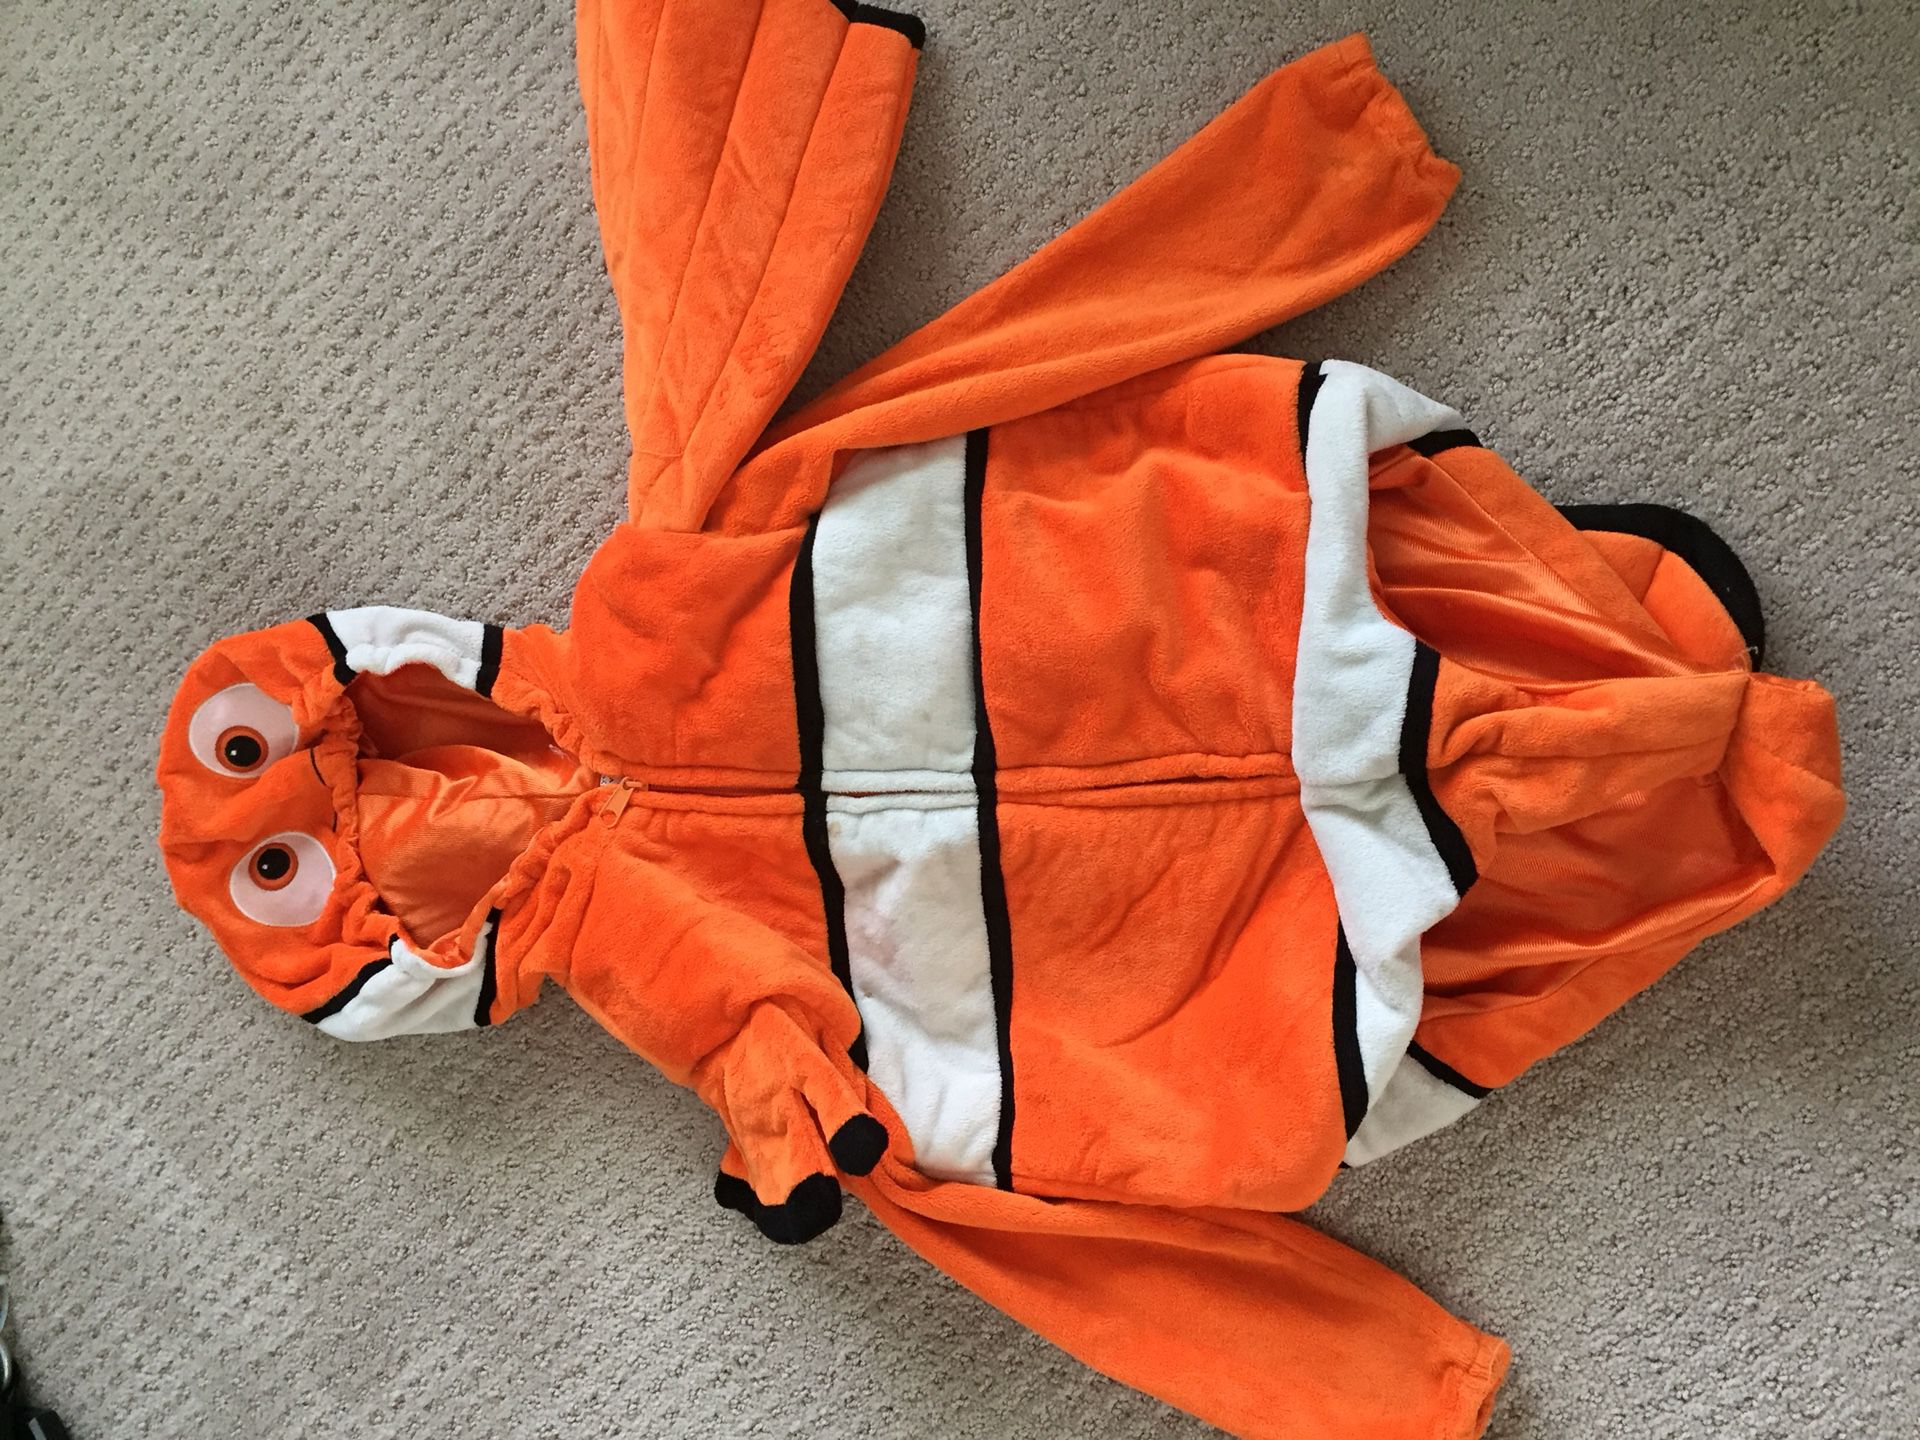 Finding Nemo Costume